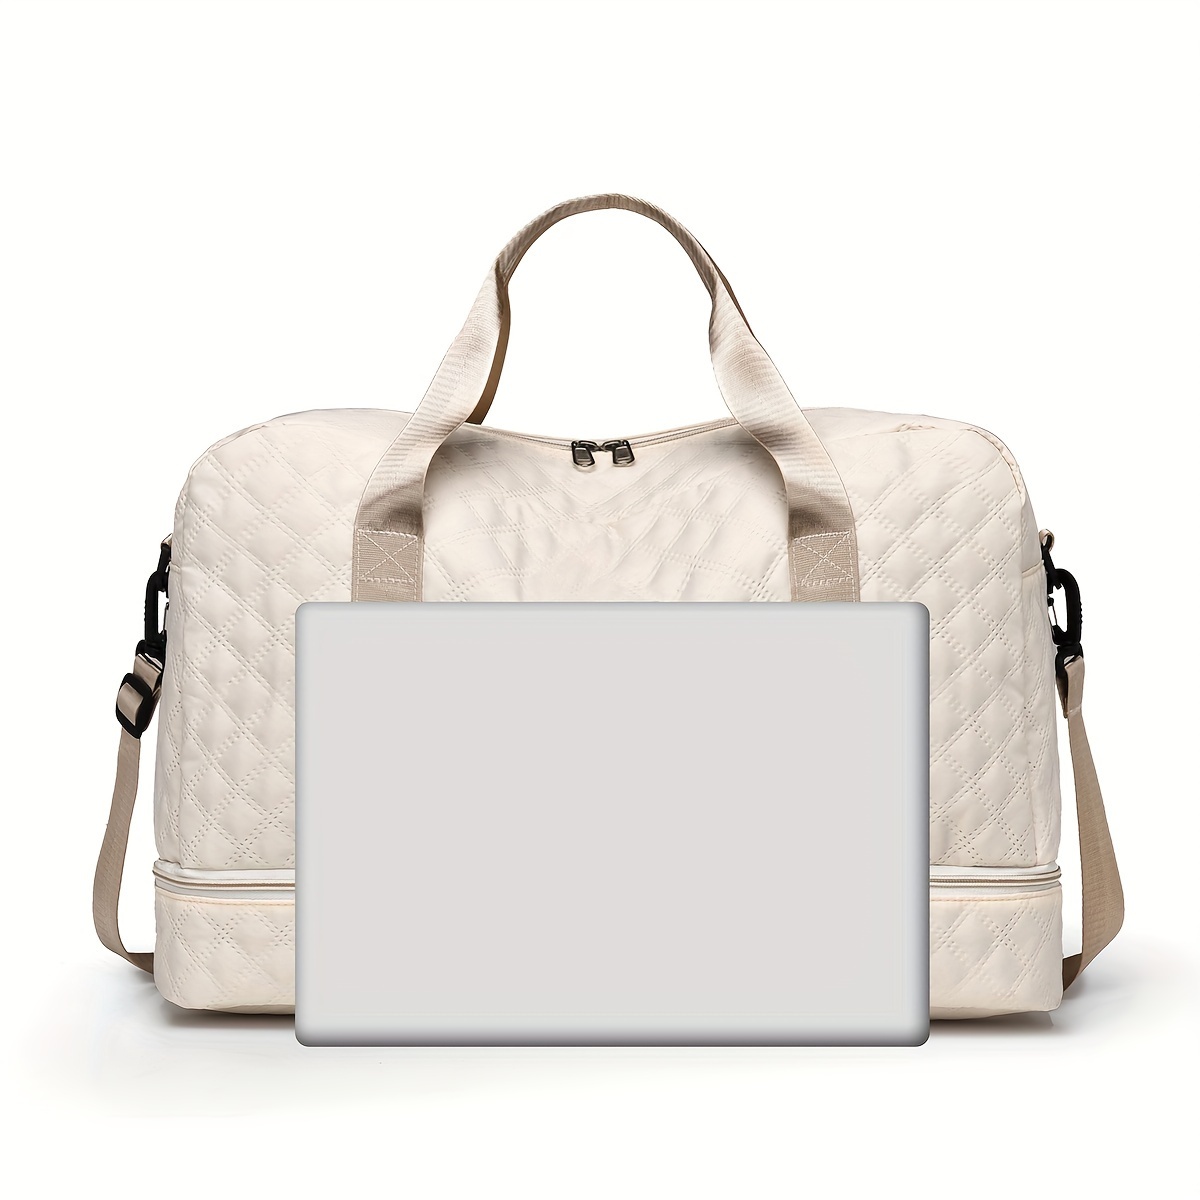 lightweight argyle pattern luggage bag large capacity travel duffle bag portable overnight bag details 11